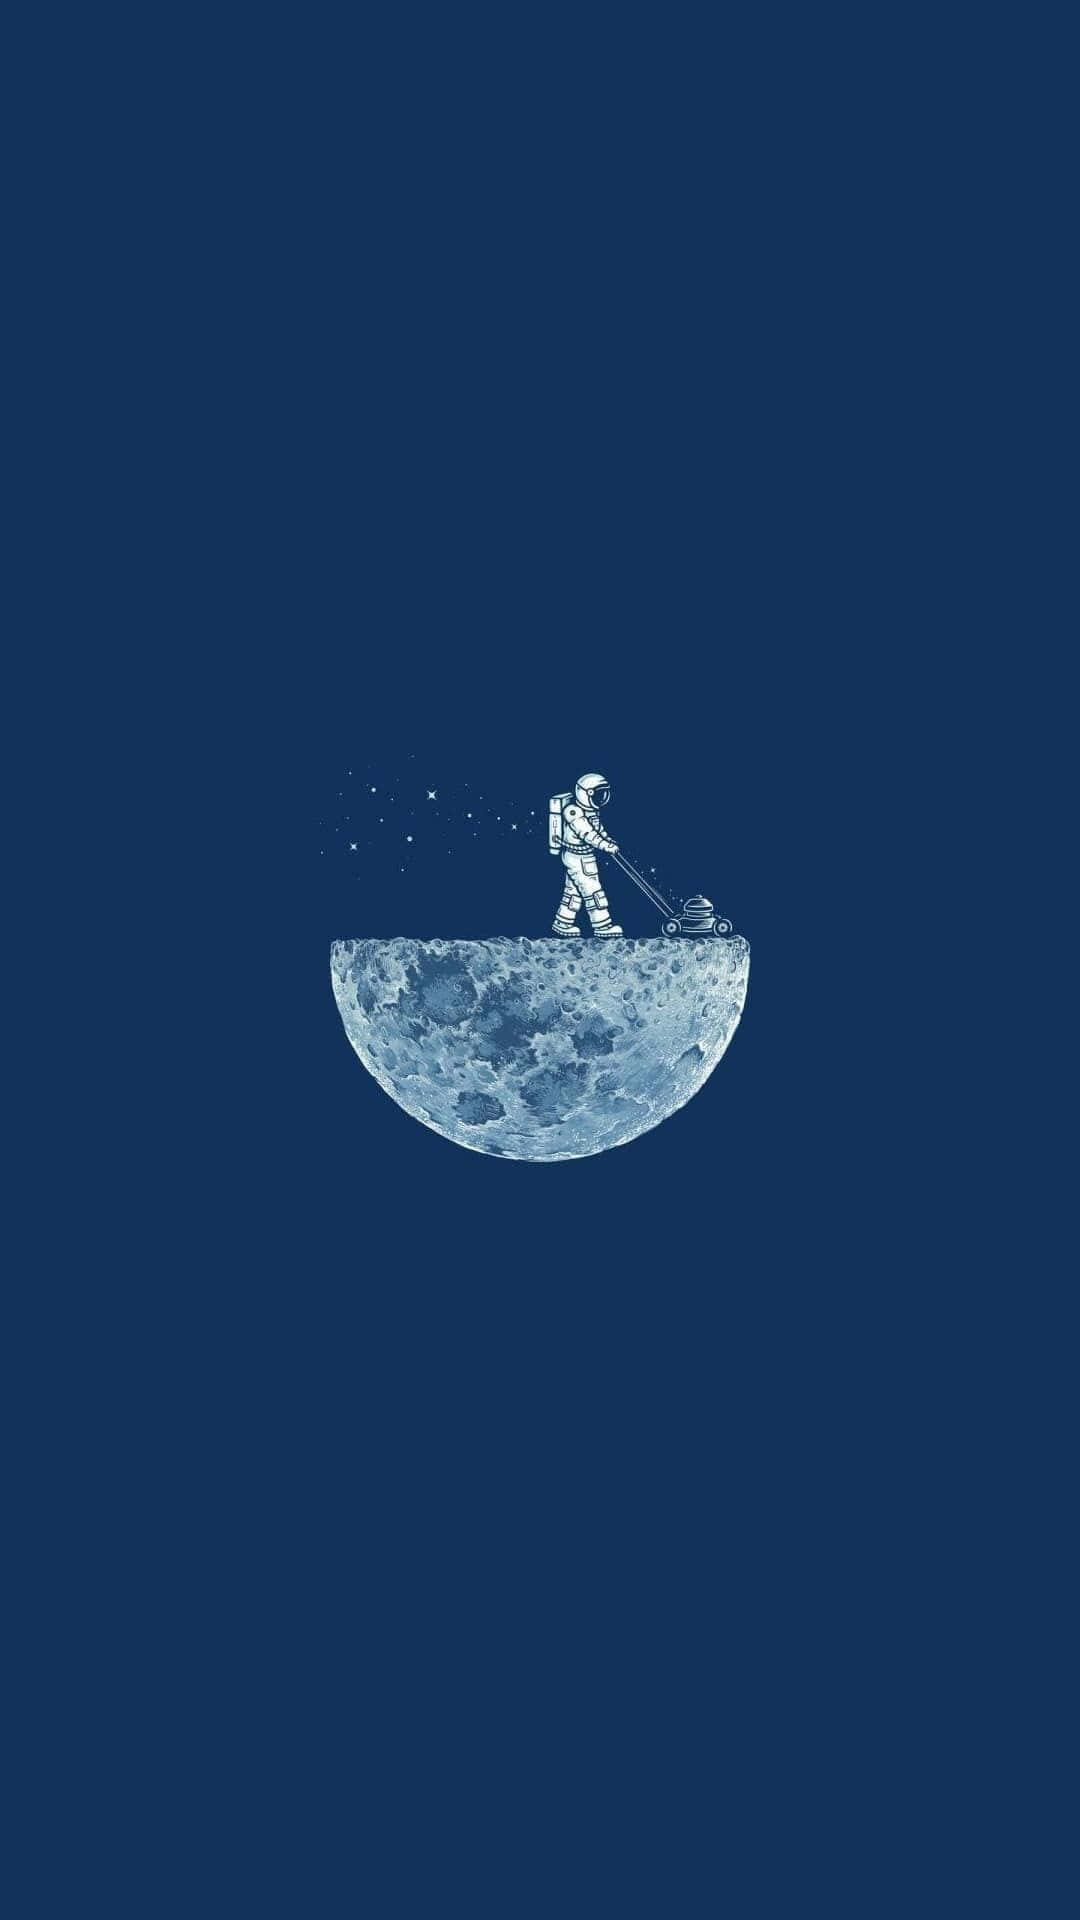 A Man Is Walking On The Moon Wallpaper